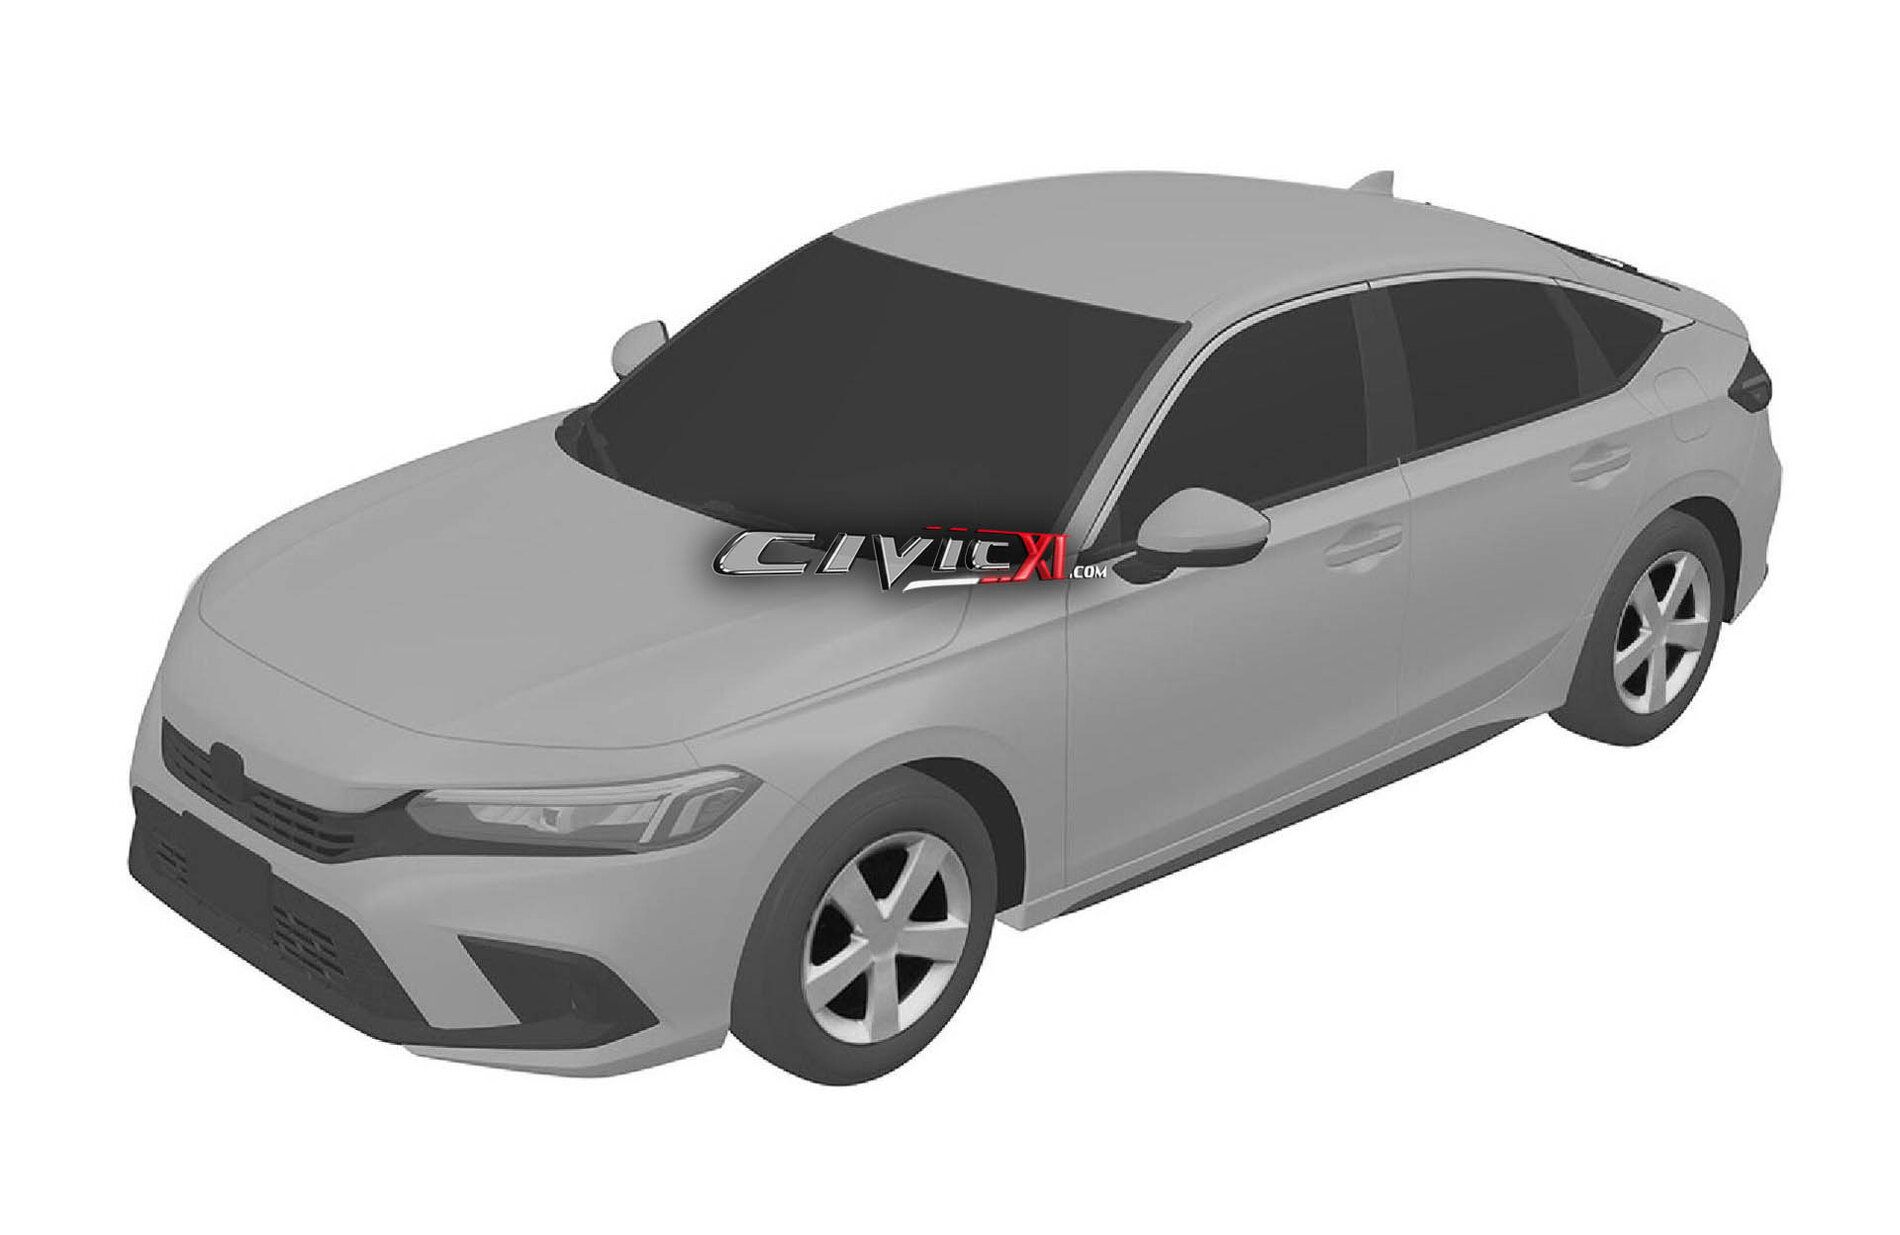 2022 Honda Civic Hatchback Leaked in Patent Image